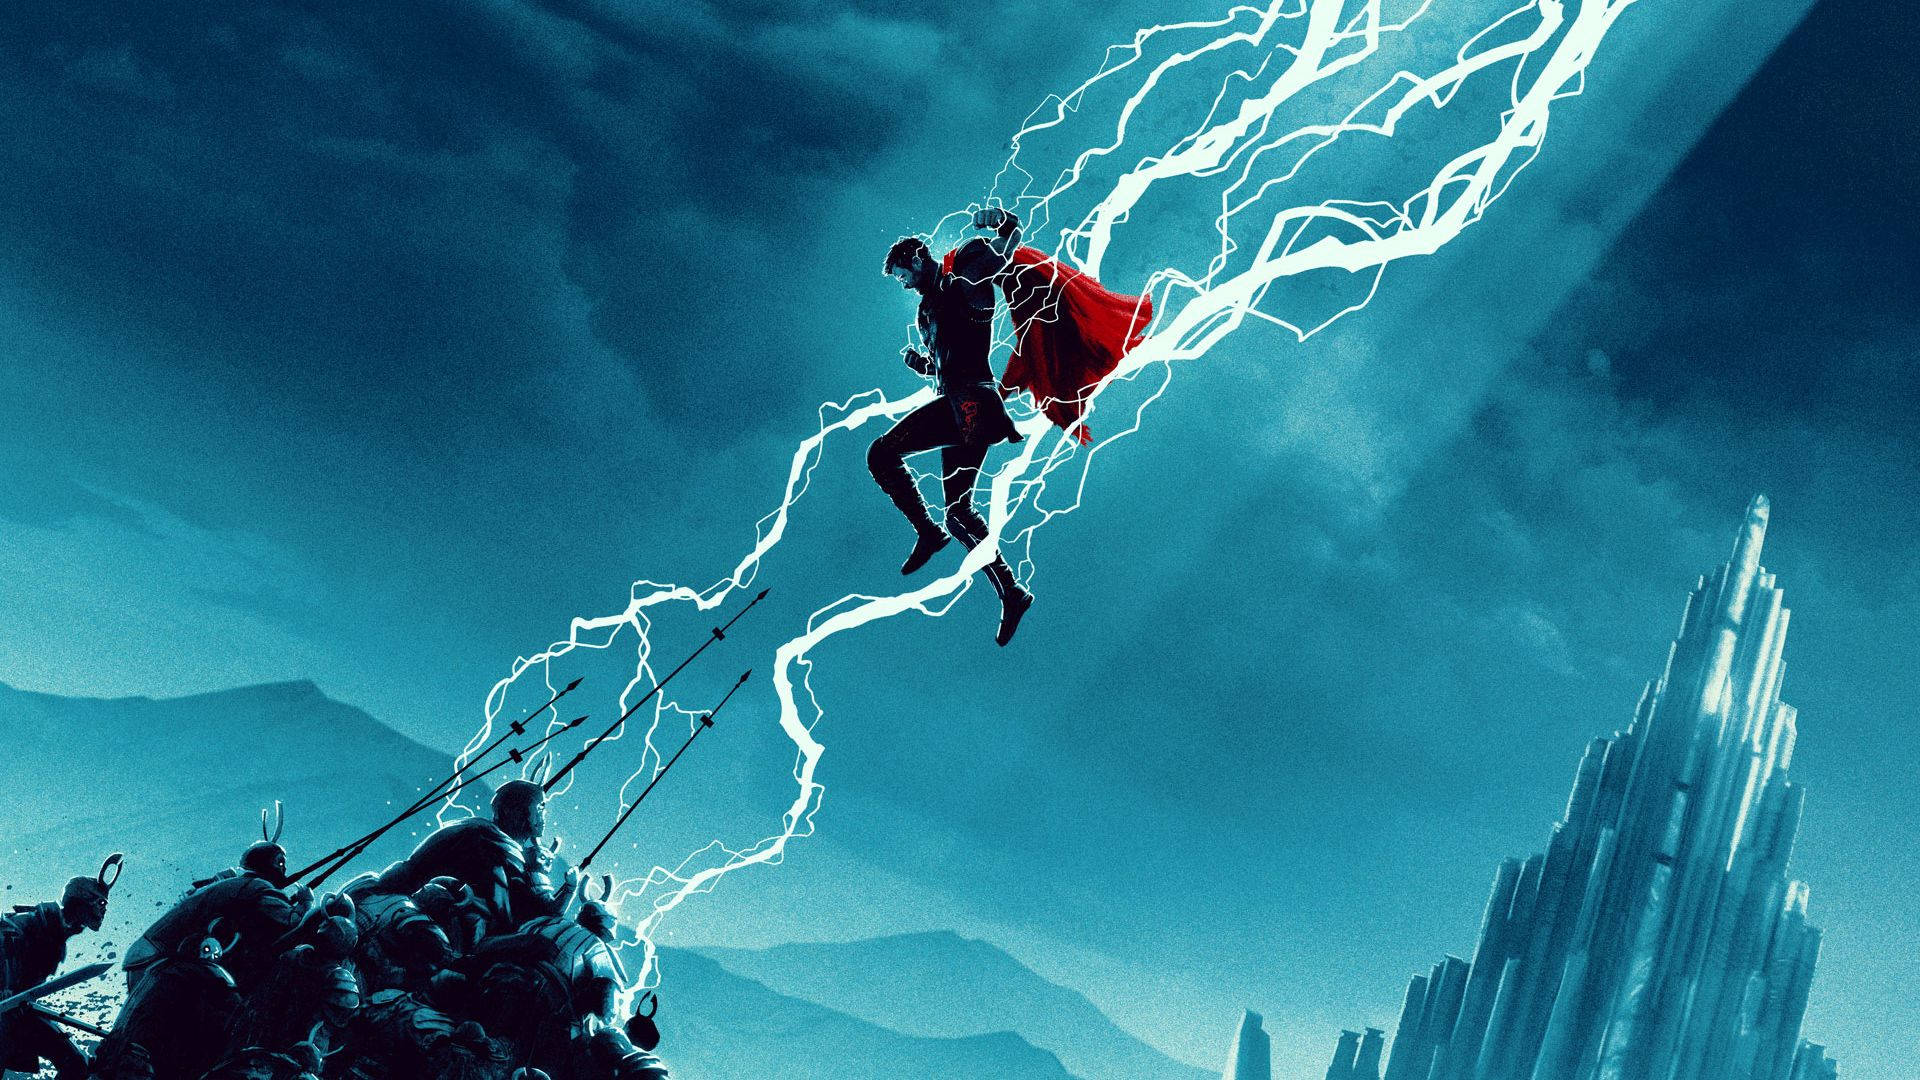 Thor Superhero Pictures Wallpaper